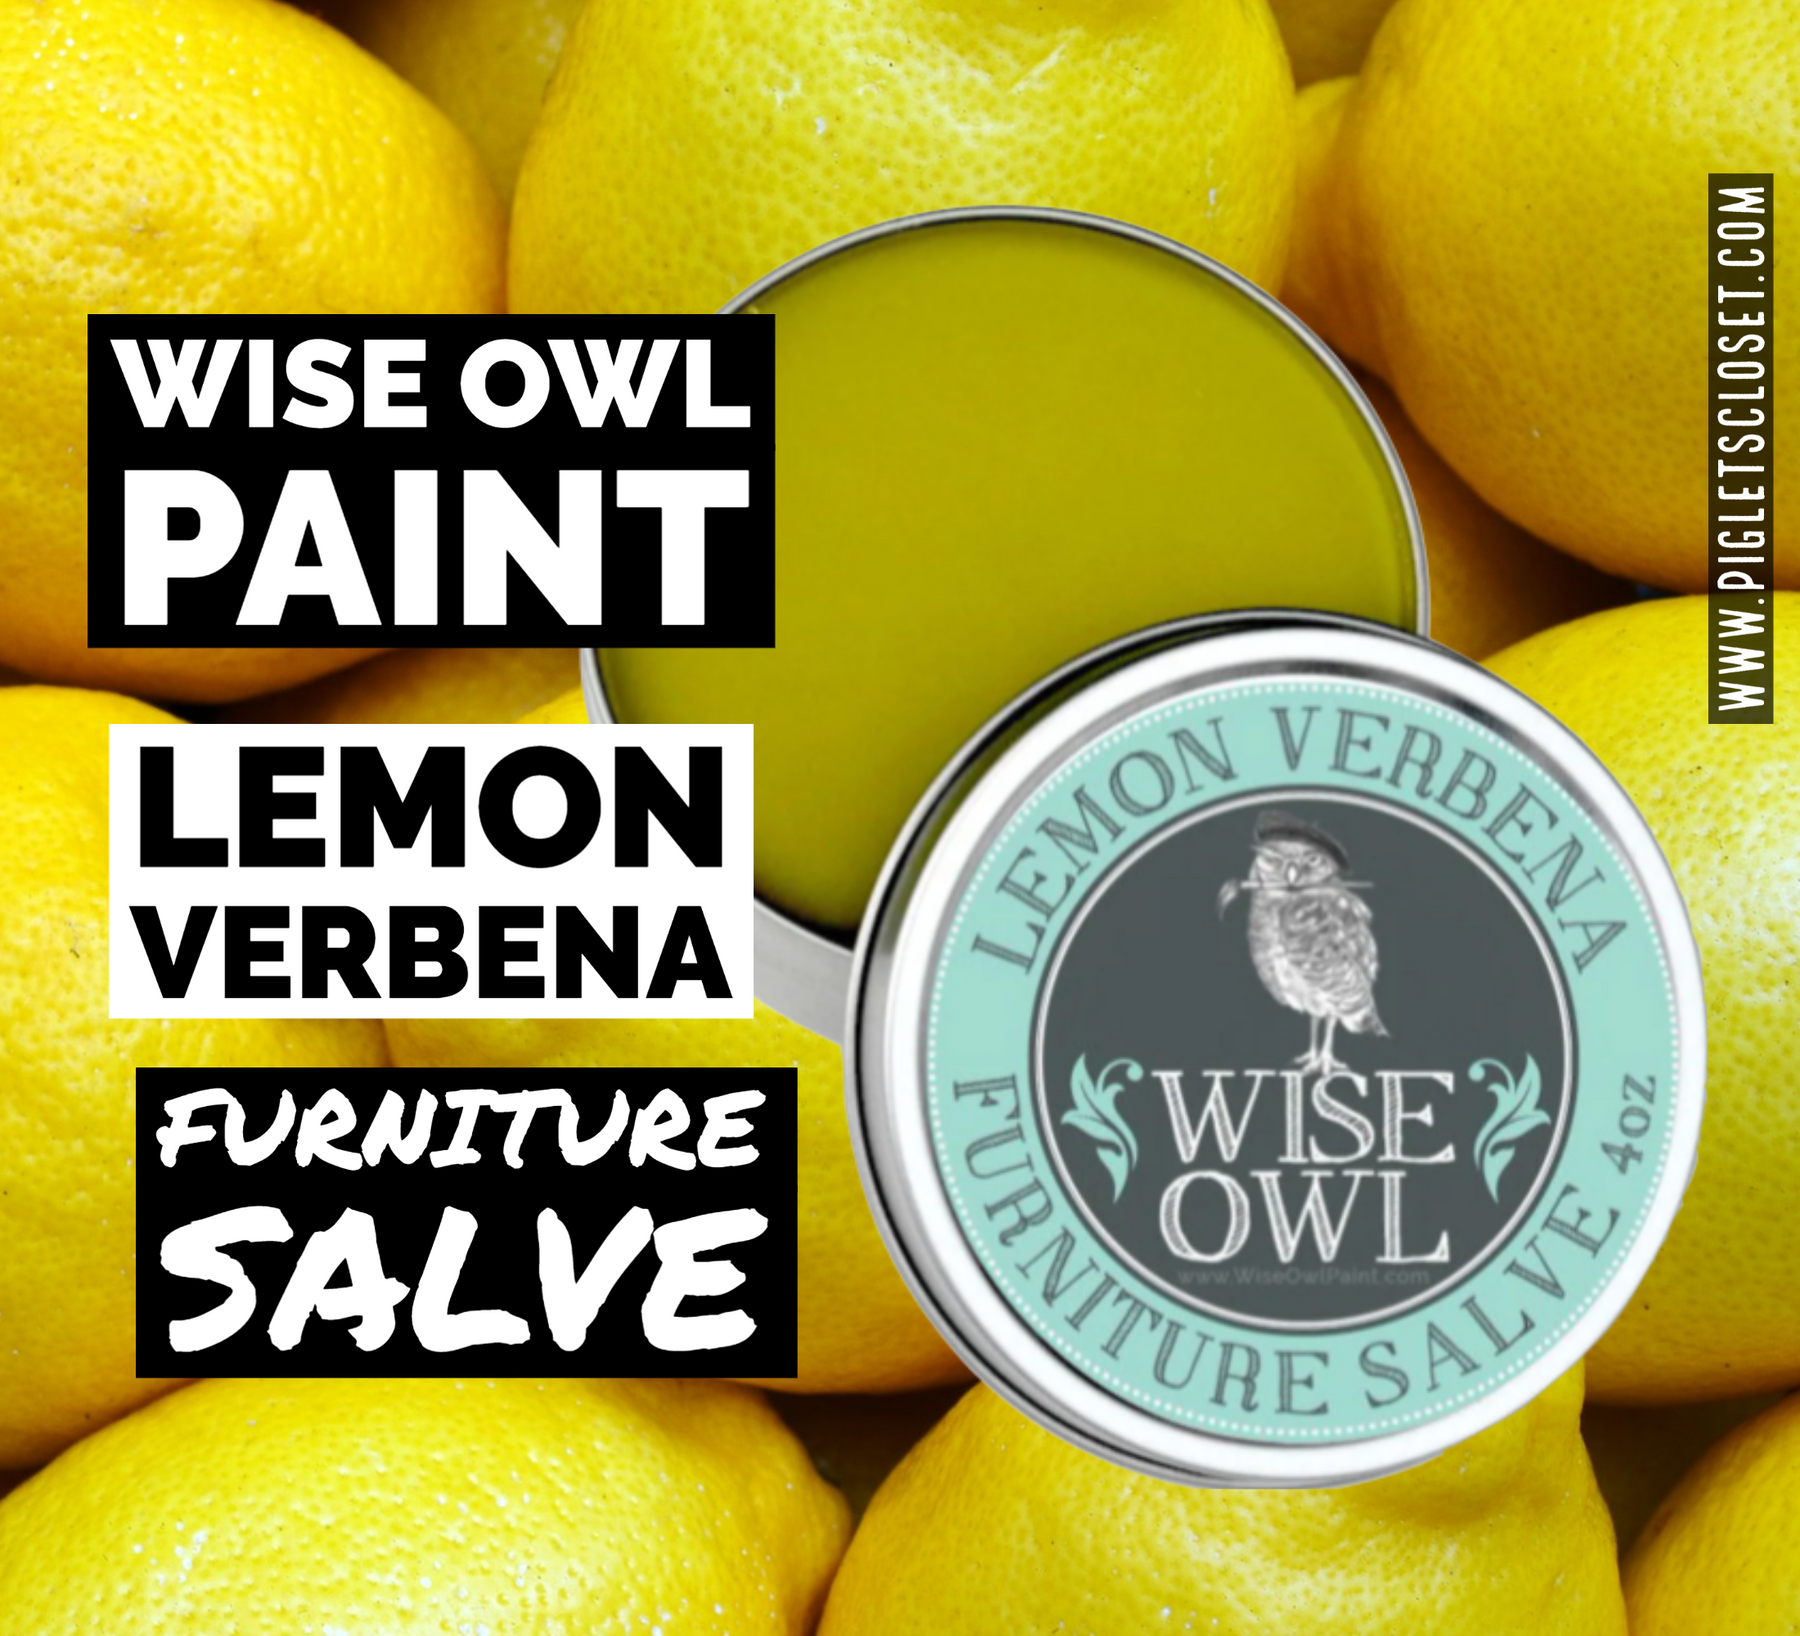 wise owl lavender furniture salve 4 Oz